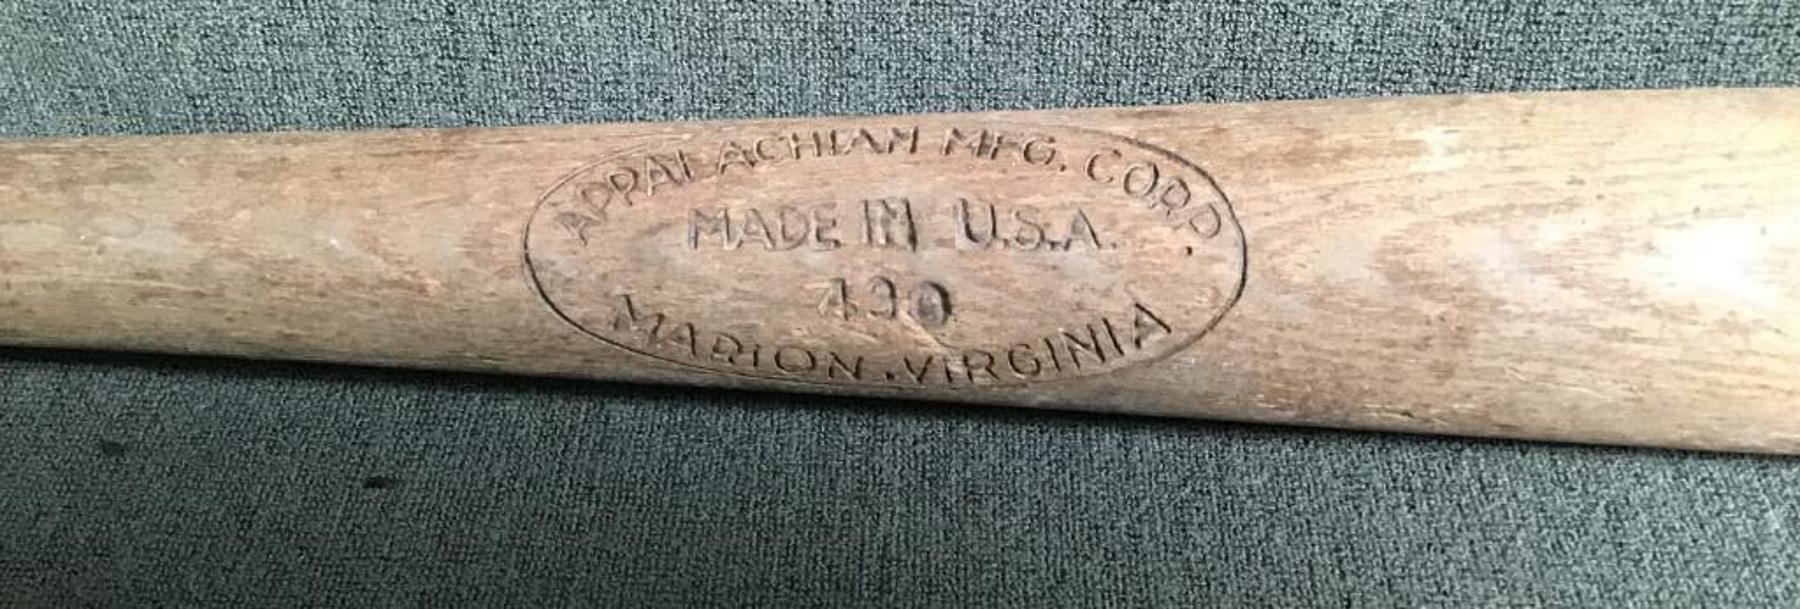 Image for Appalachian Mfg Corp Bat From Marion, Va